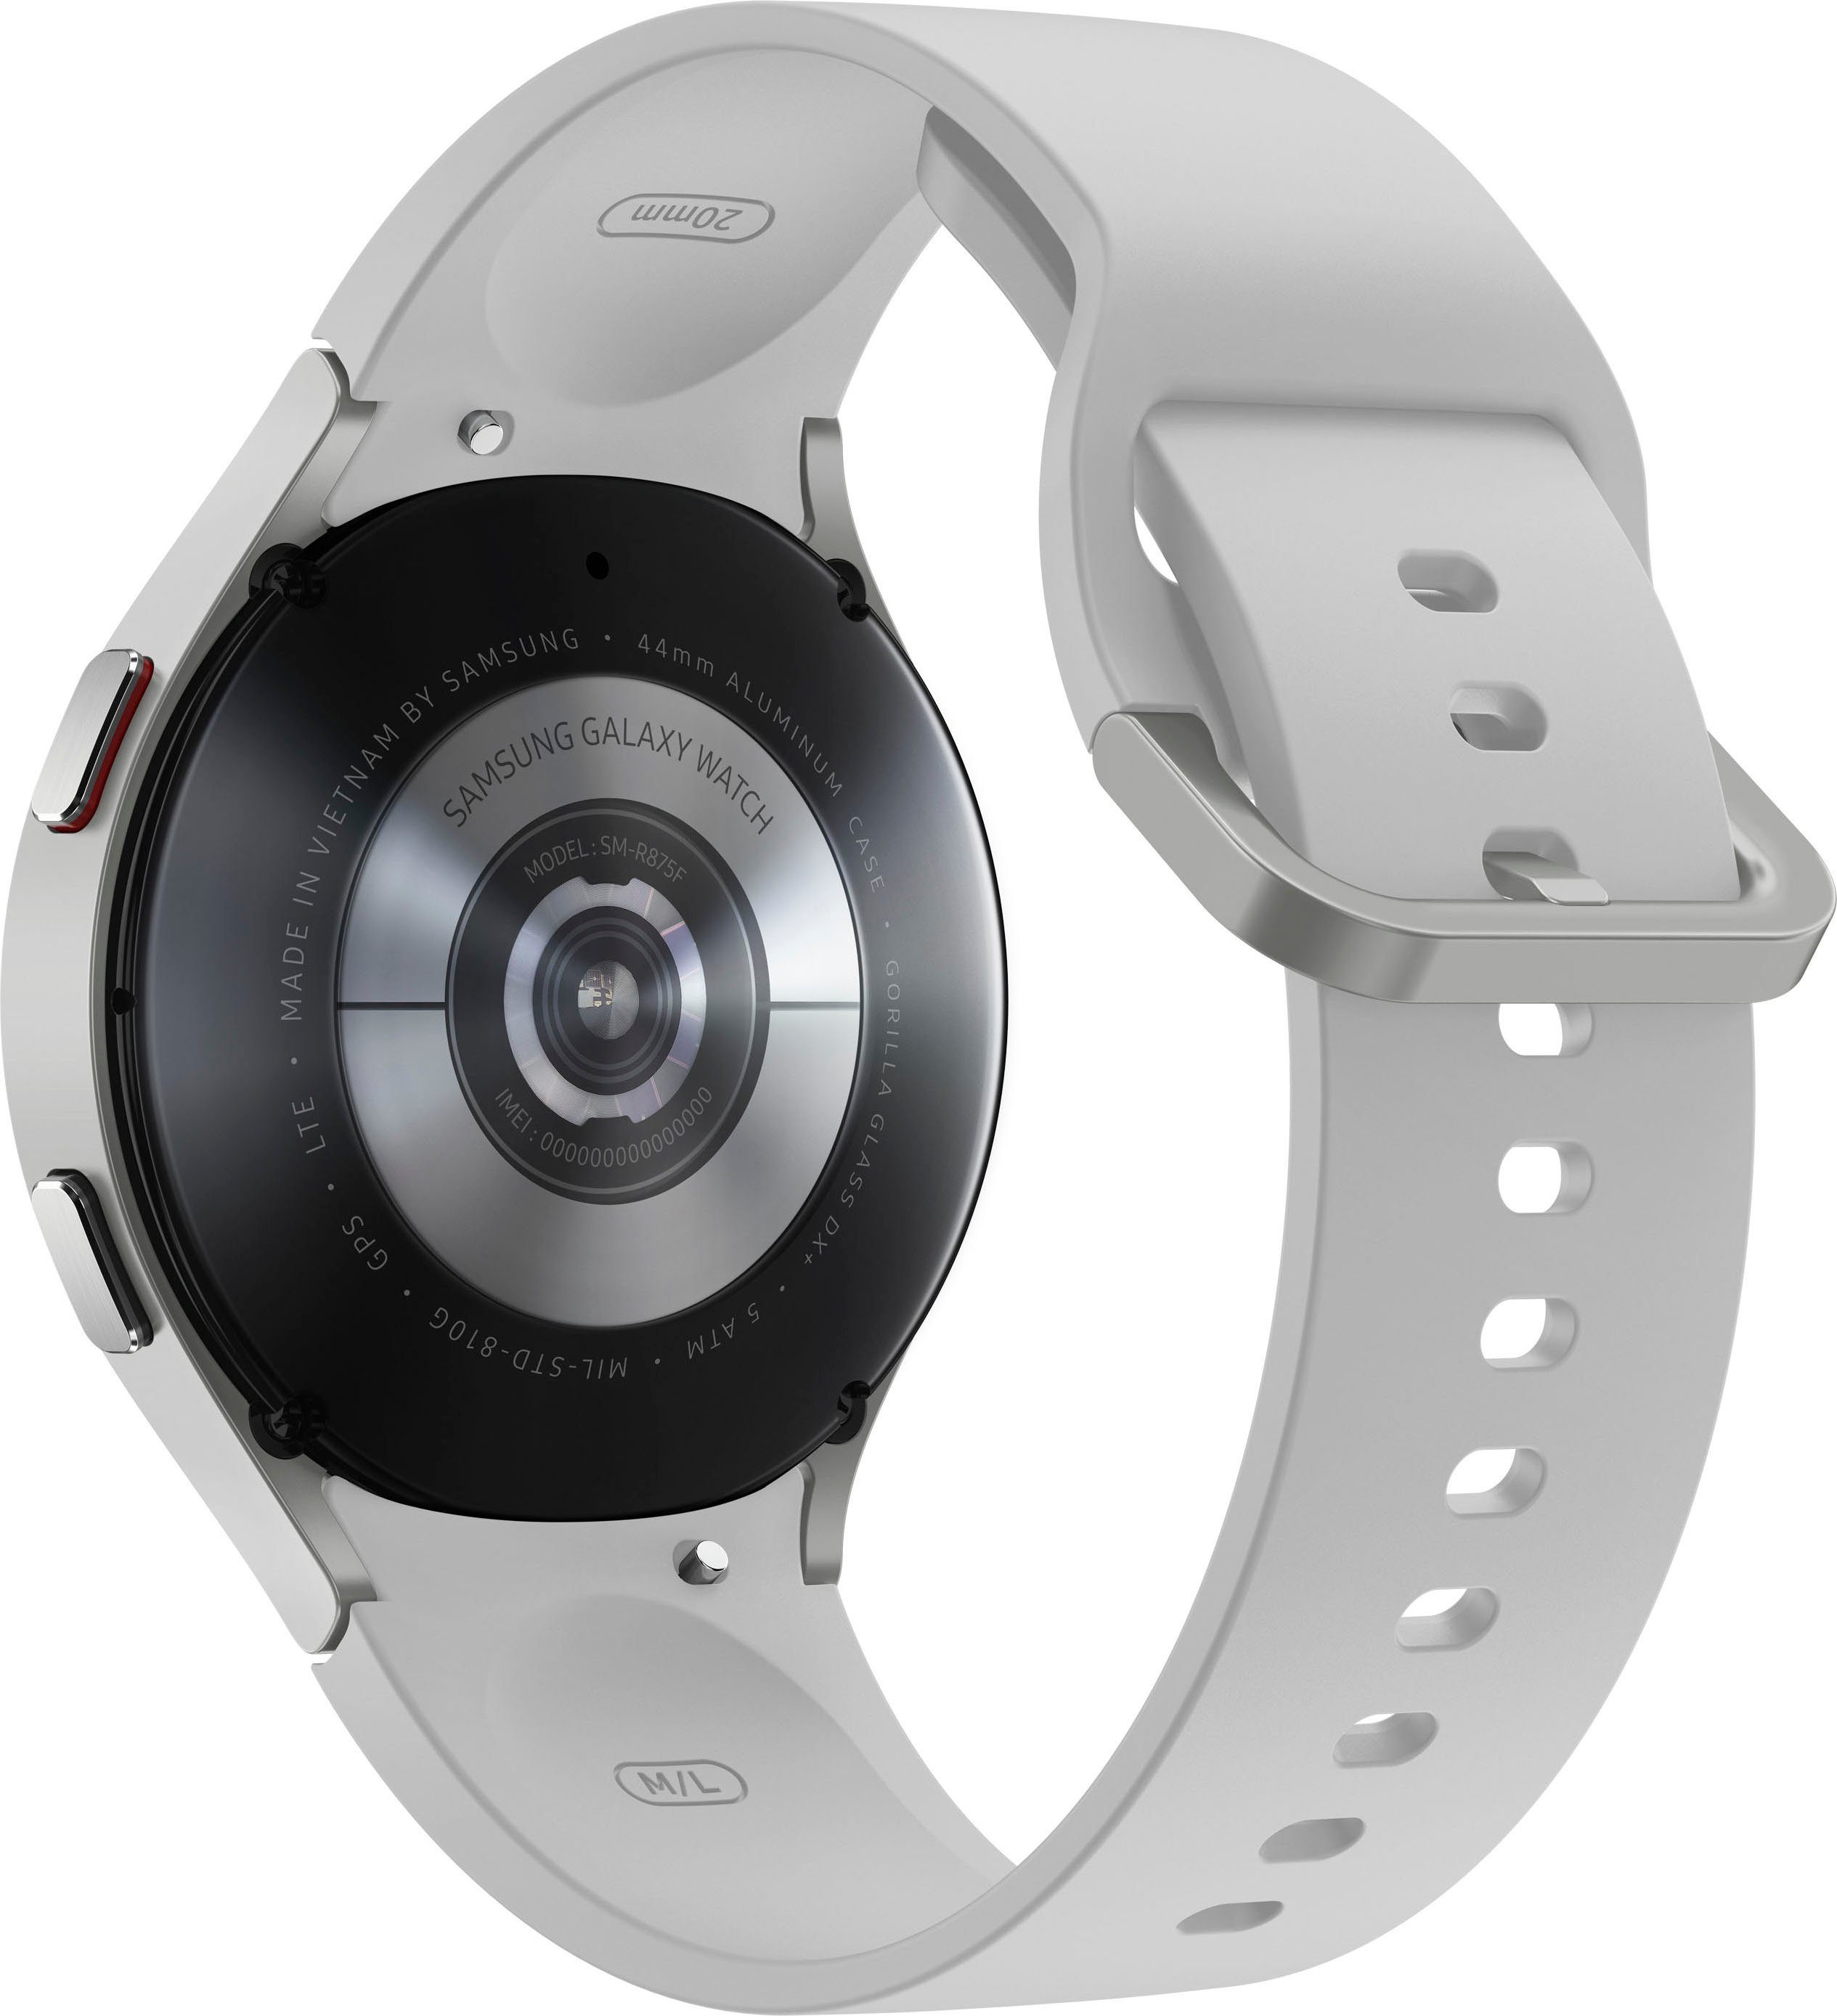 silber Gesundheitsfunktionen Tracker, by (1,4 | Fitness Google), Silber Smartwatch Samsung 4 Fitness Uhr, Watch LTE OS Zoll, 44mm Galaxy Wear